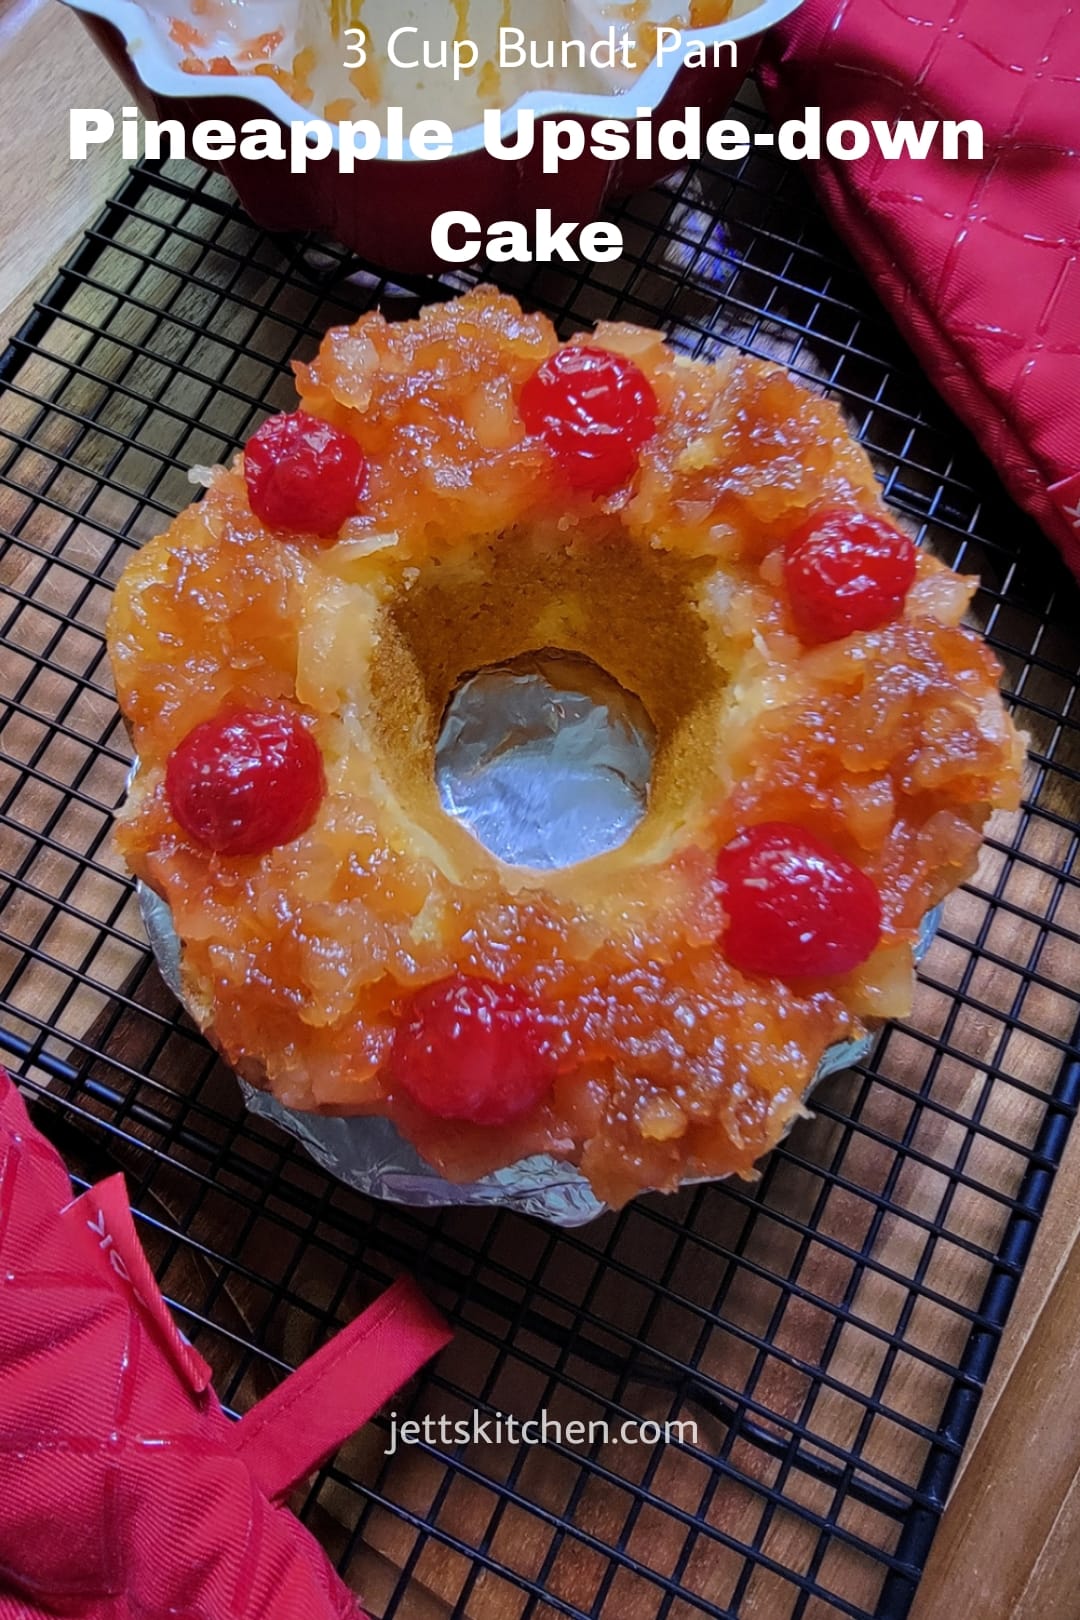 https://jettskitchen.com/wp-content/uploads/2022/10/3-cup-Bundt-Pan-Pineapple-upside-down-cake.jpg